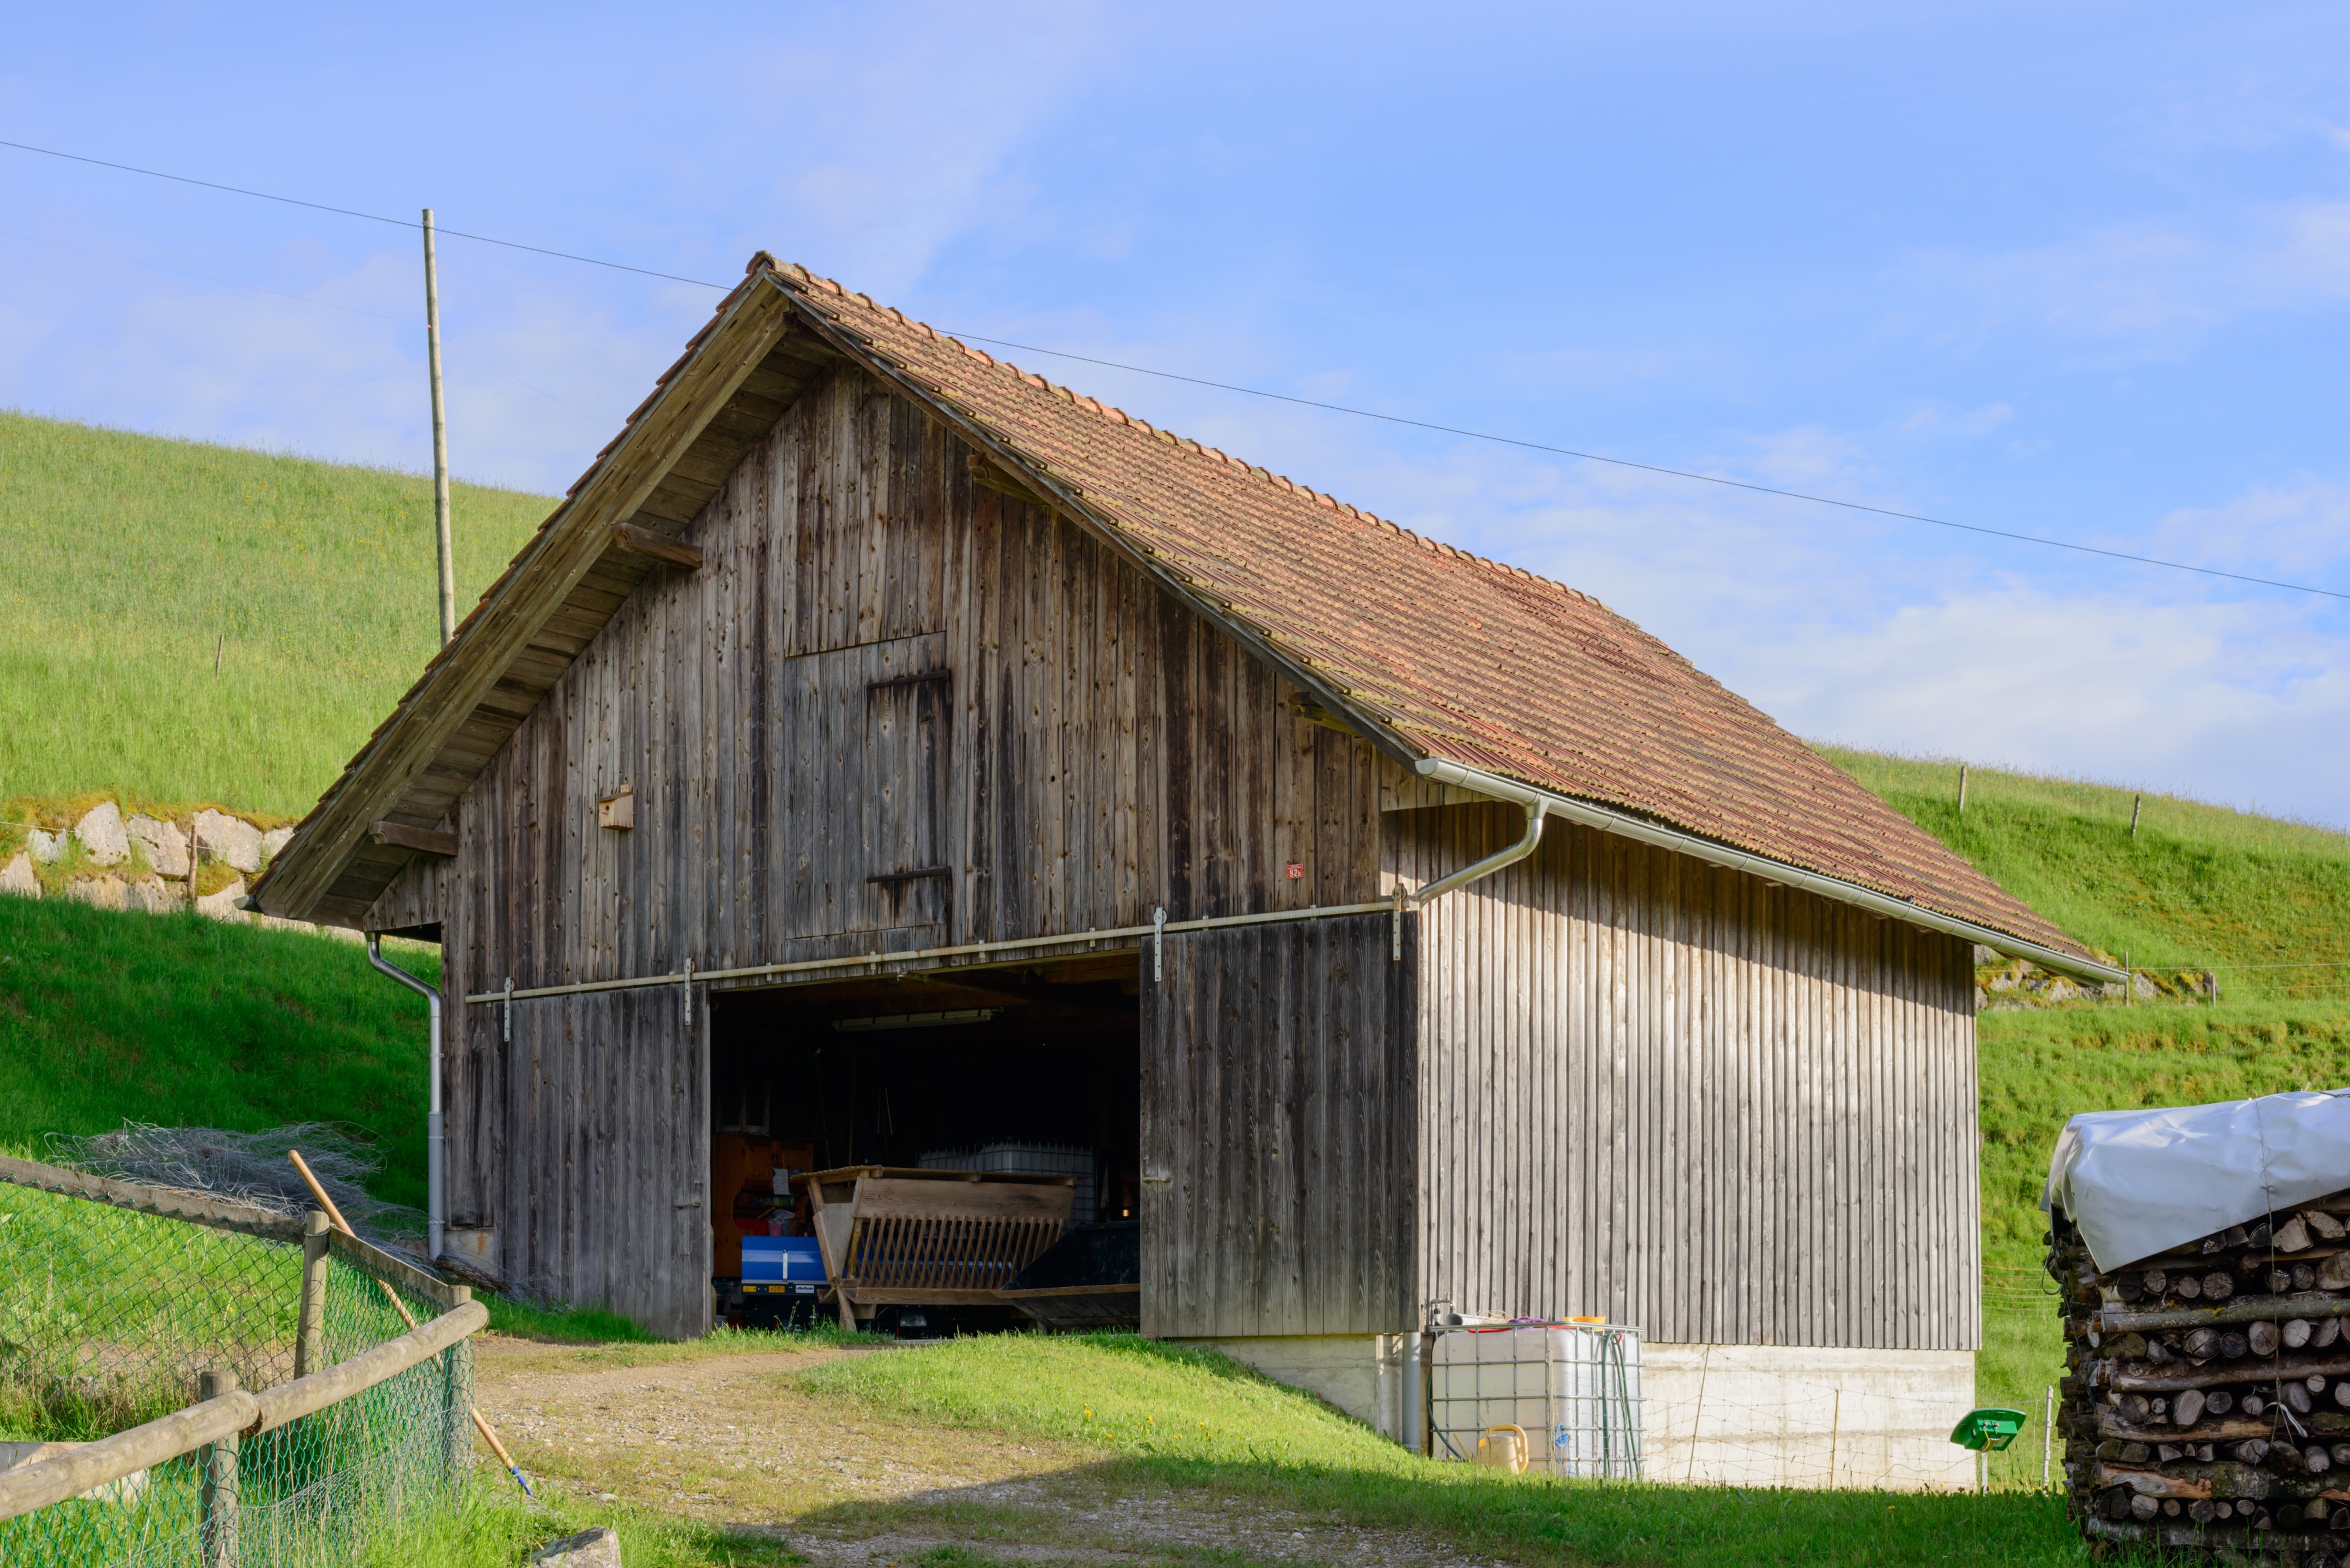 Barn near farm house at Hergiswil near Willisau - Lucerne - Switzerland - 01